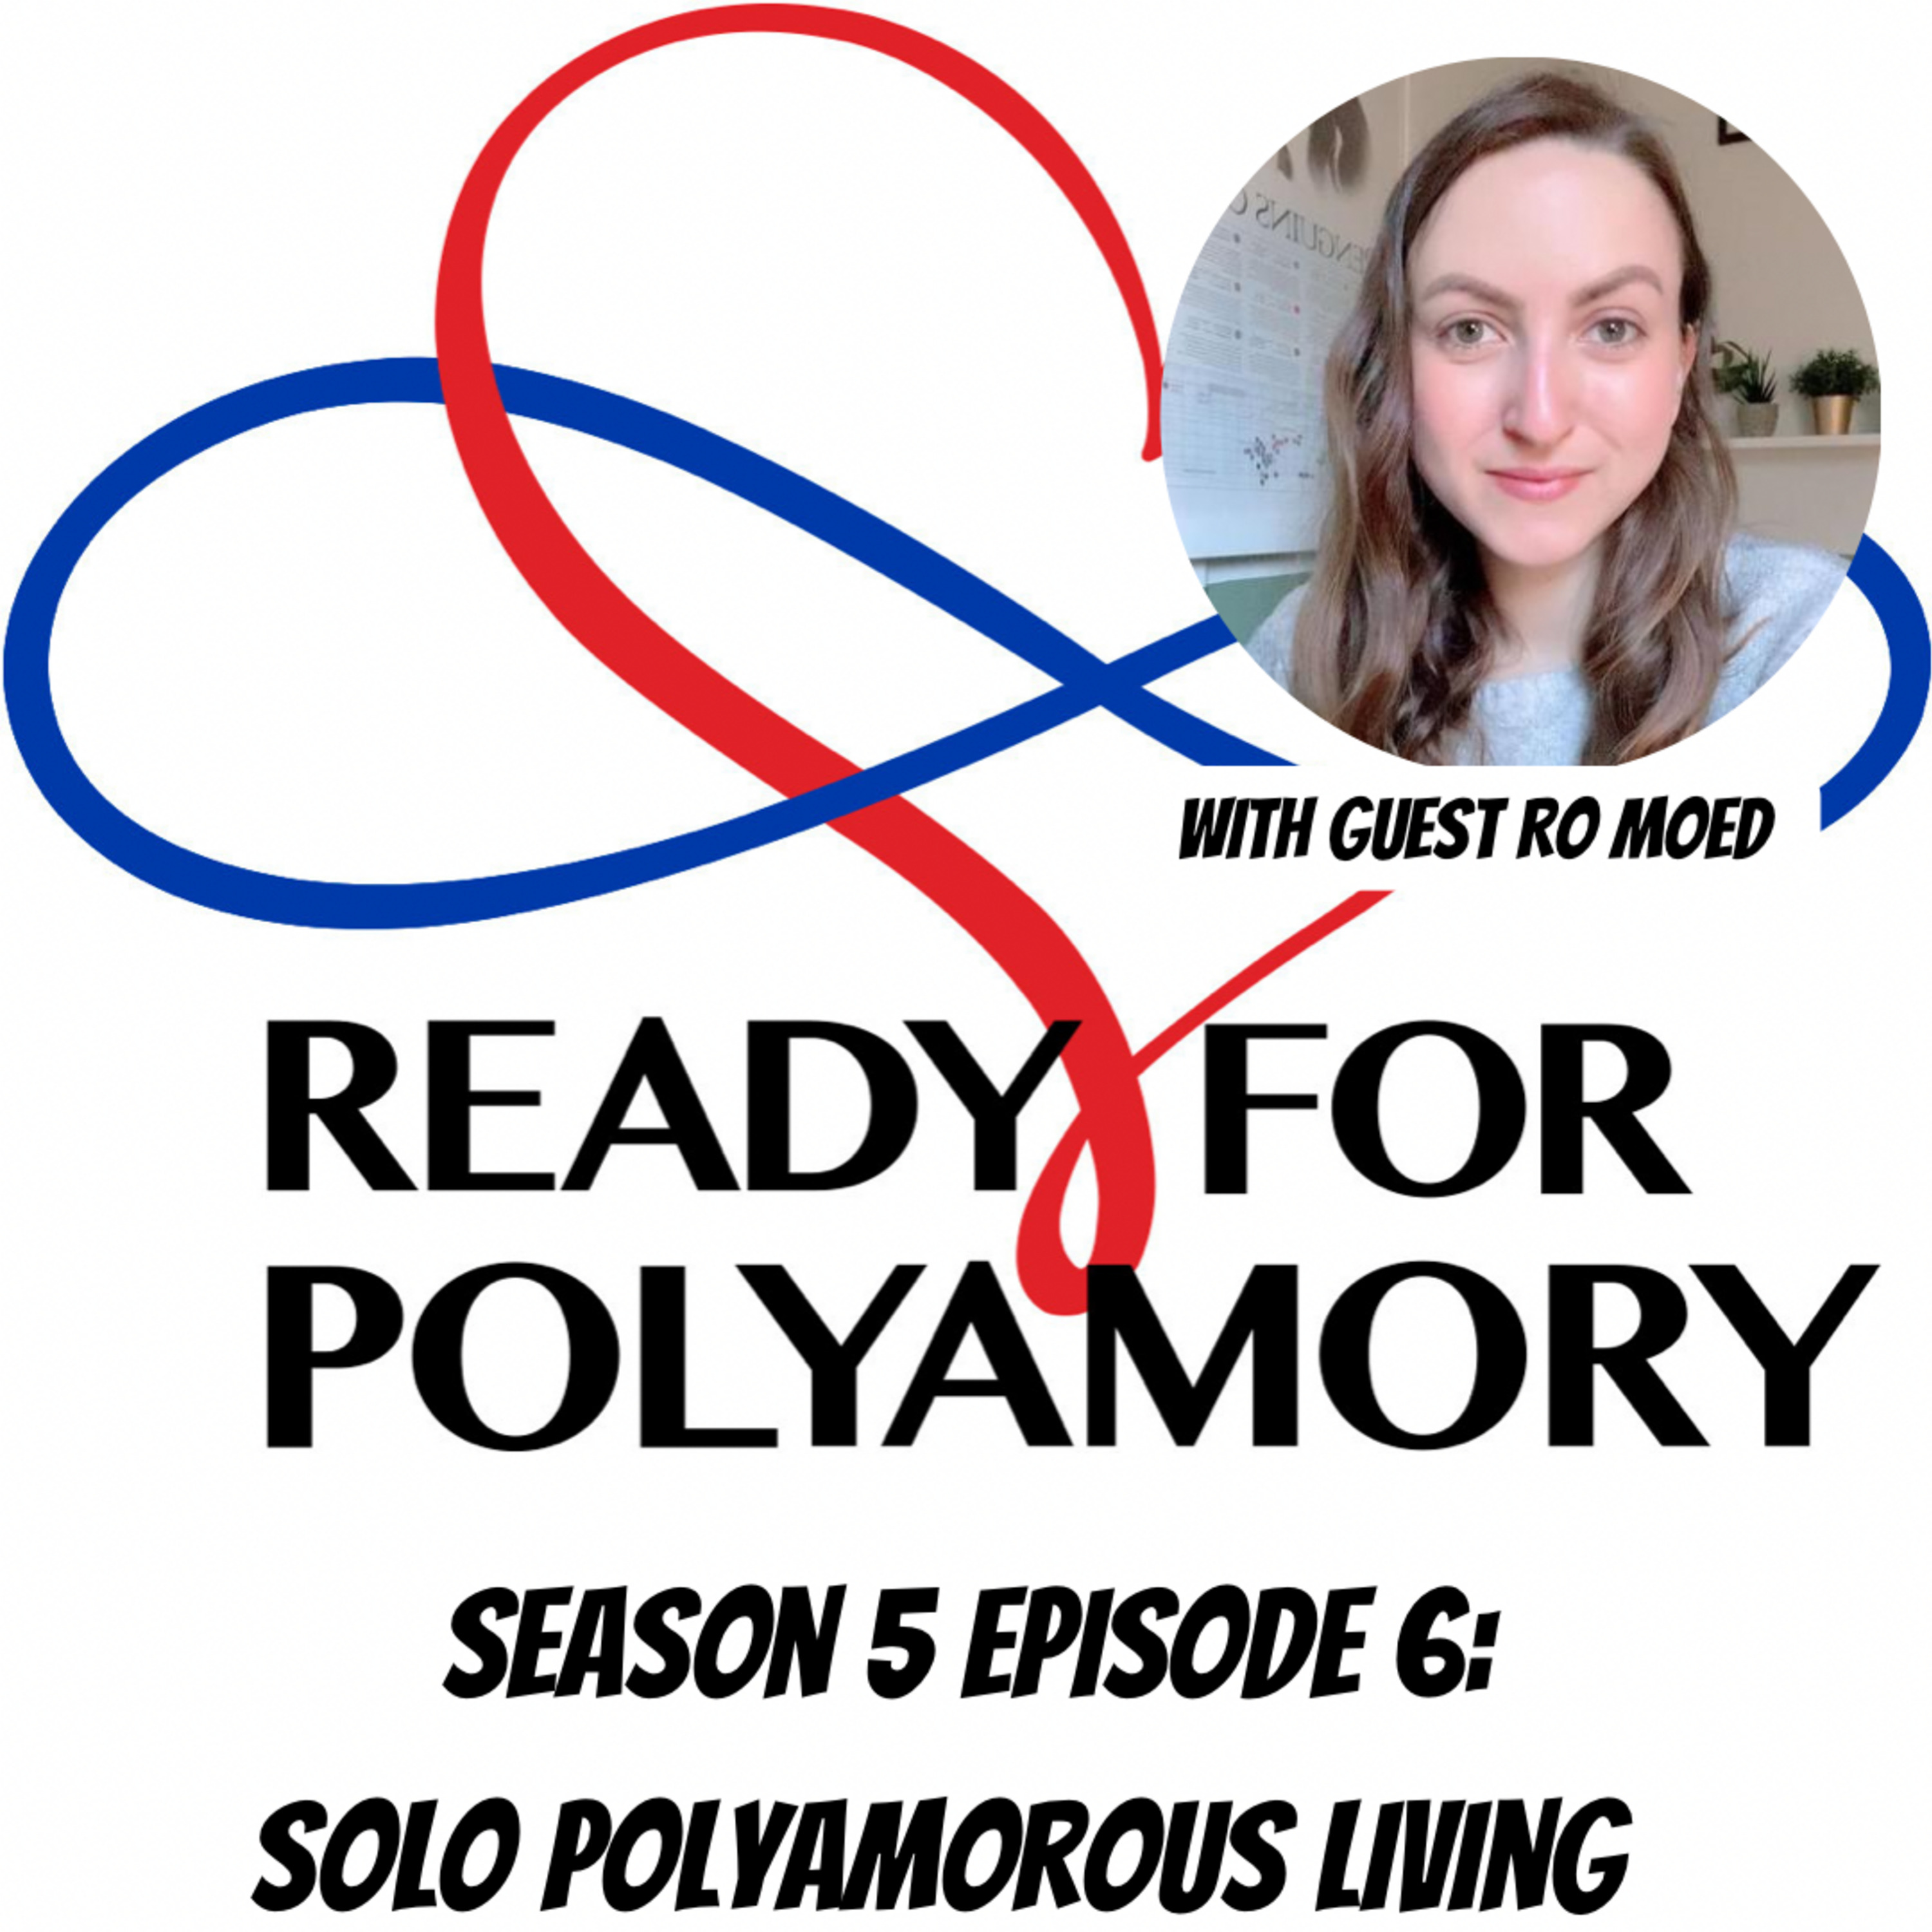 Season 5 Episode 6: Solo Polyamorous Living